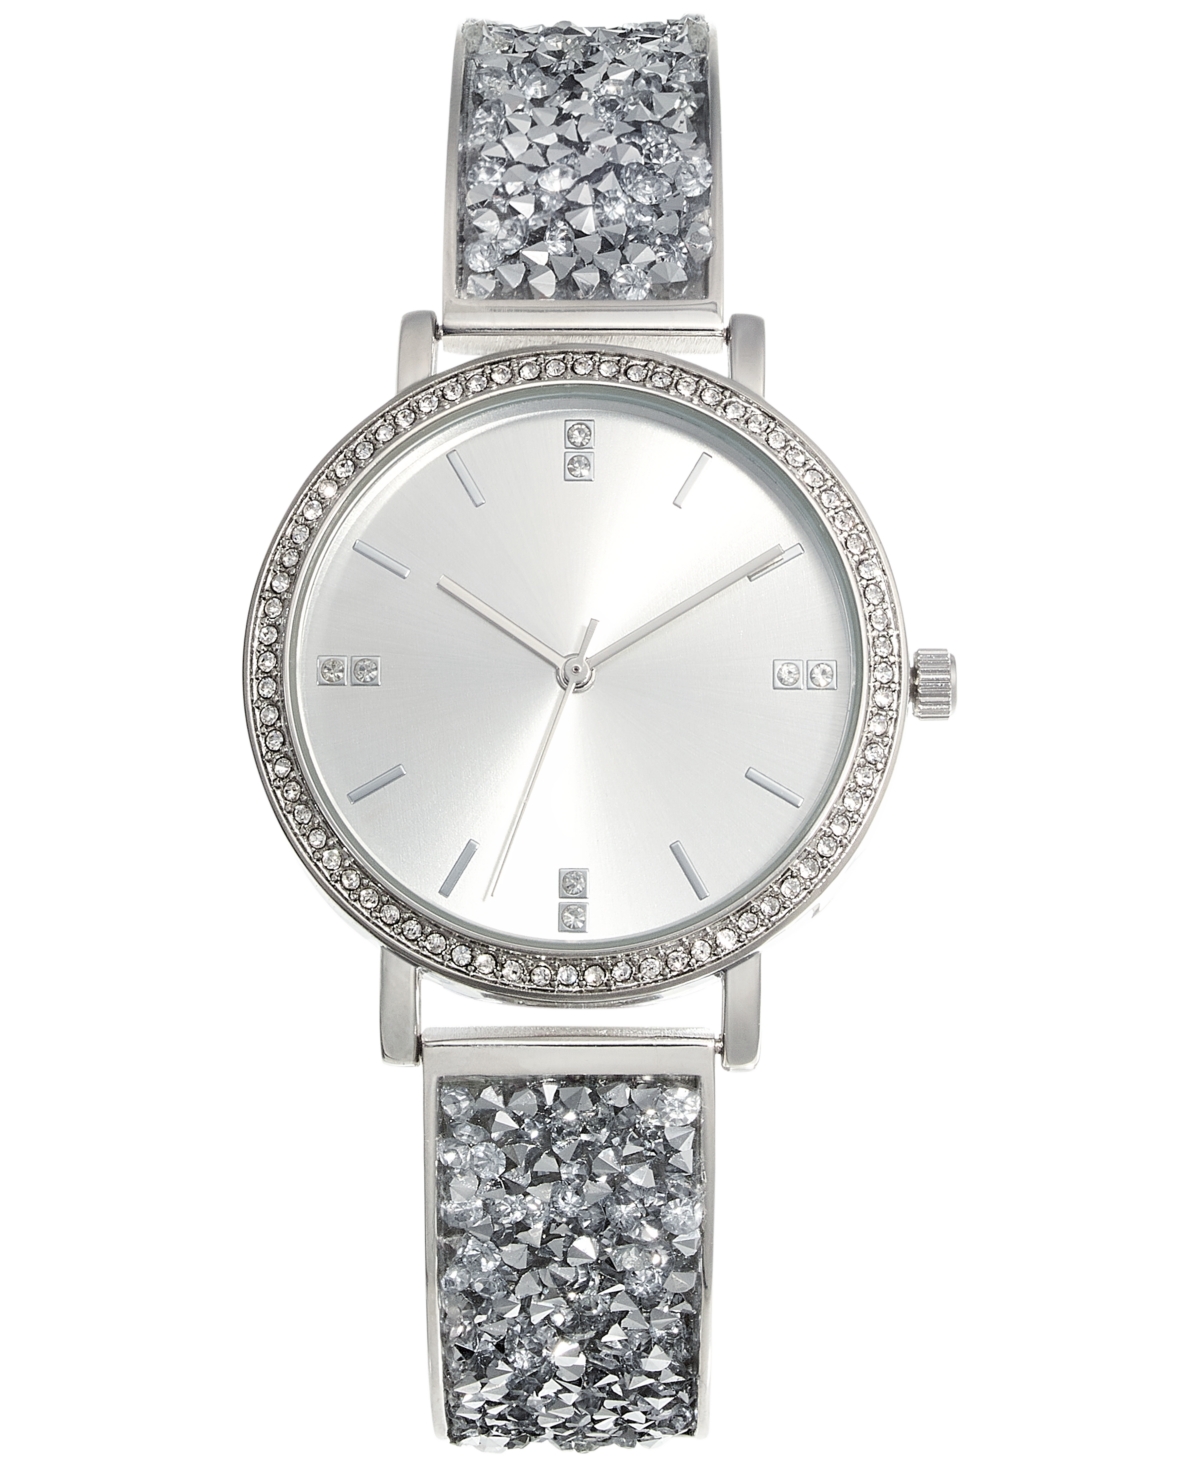 Women's Druzy Stone Silver-Tone Bracelet Watch 36mm, Created for Macy's - Silver